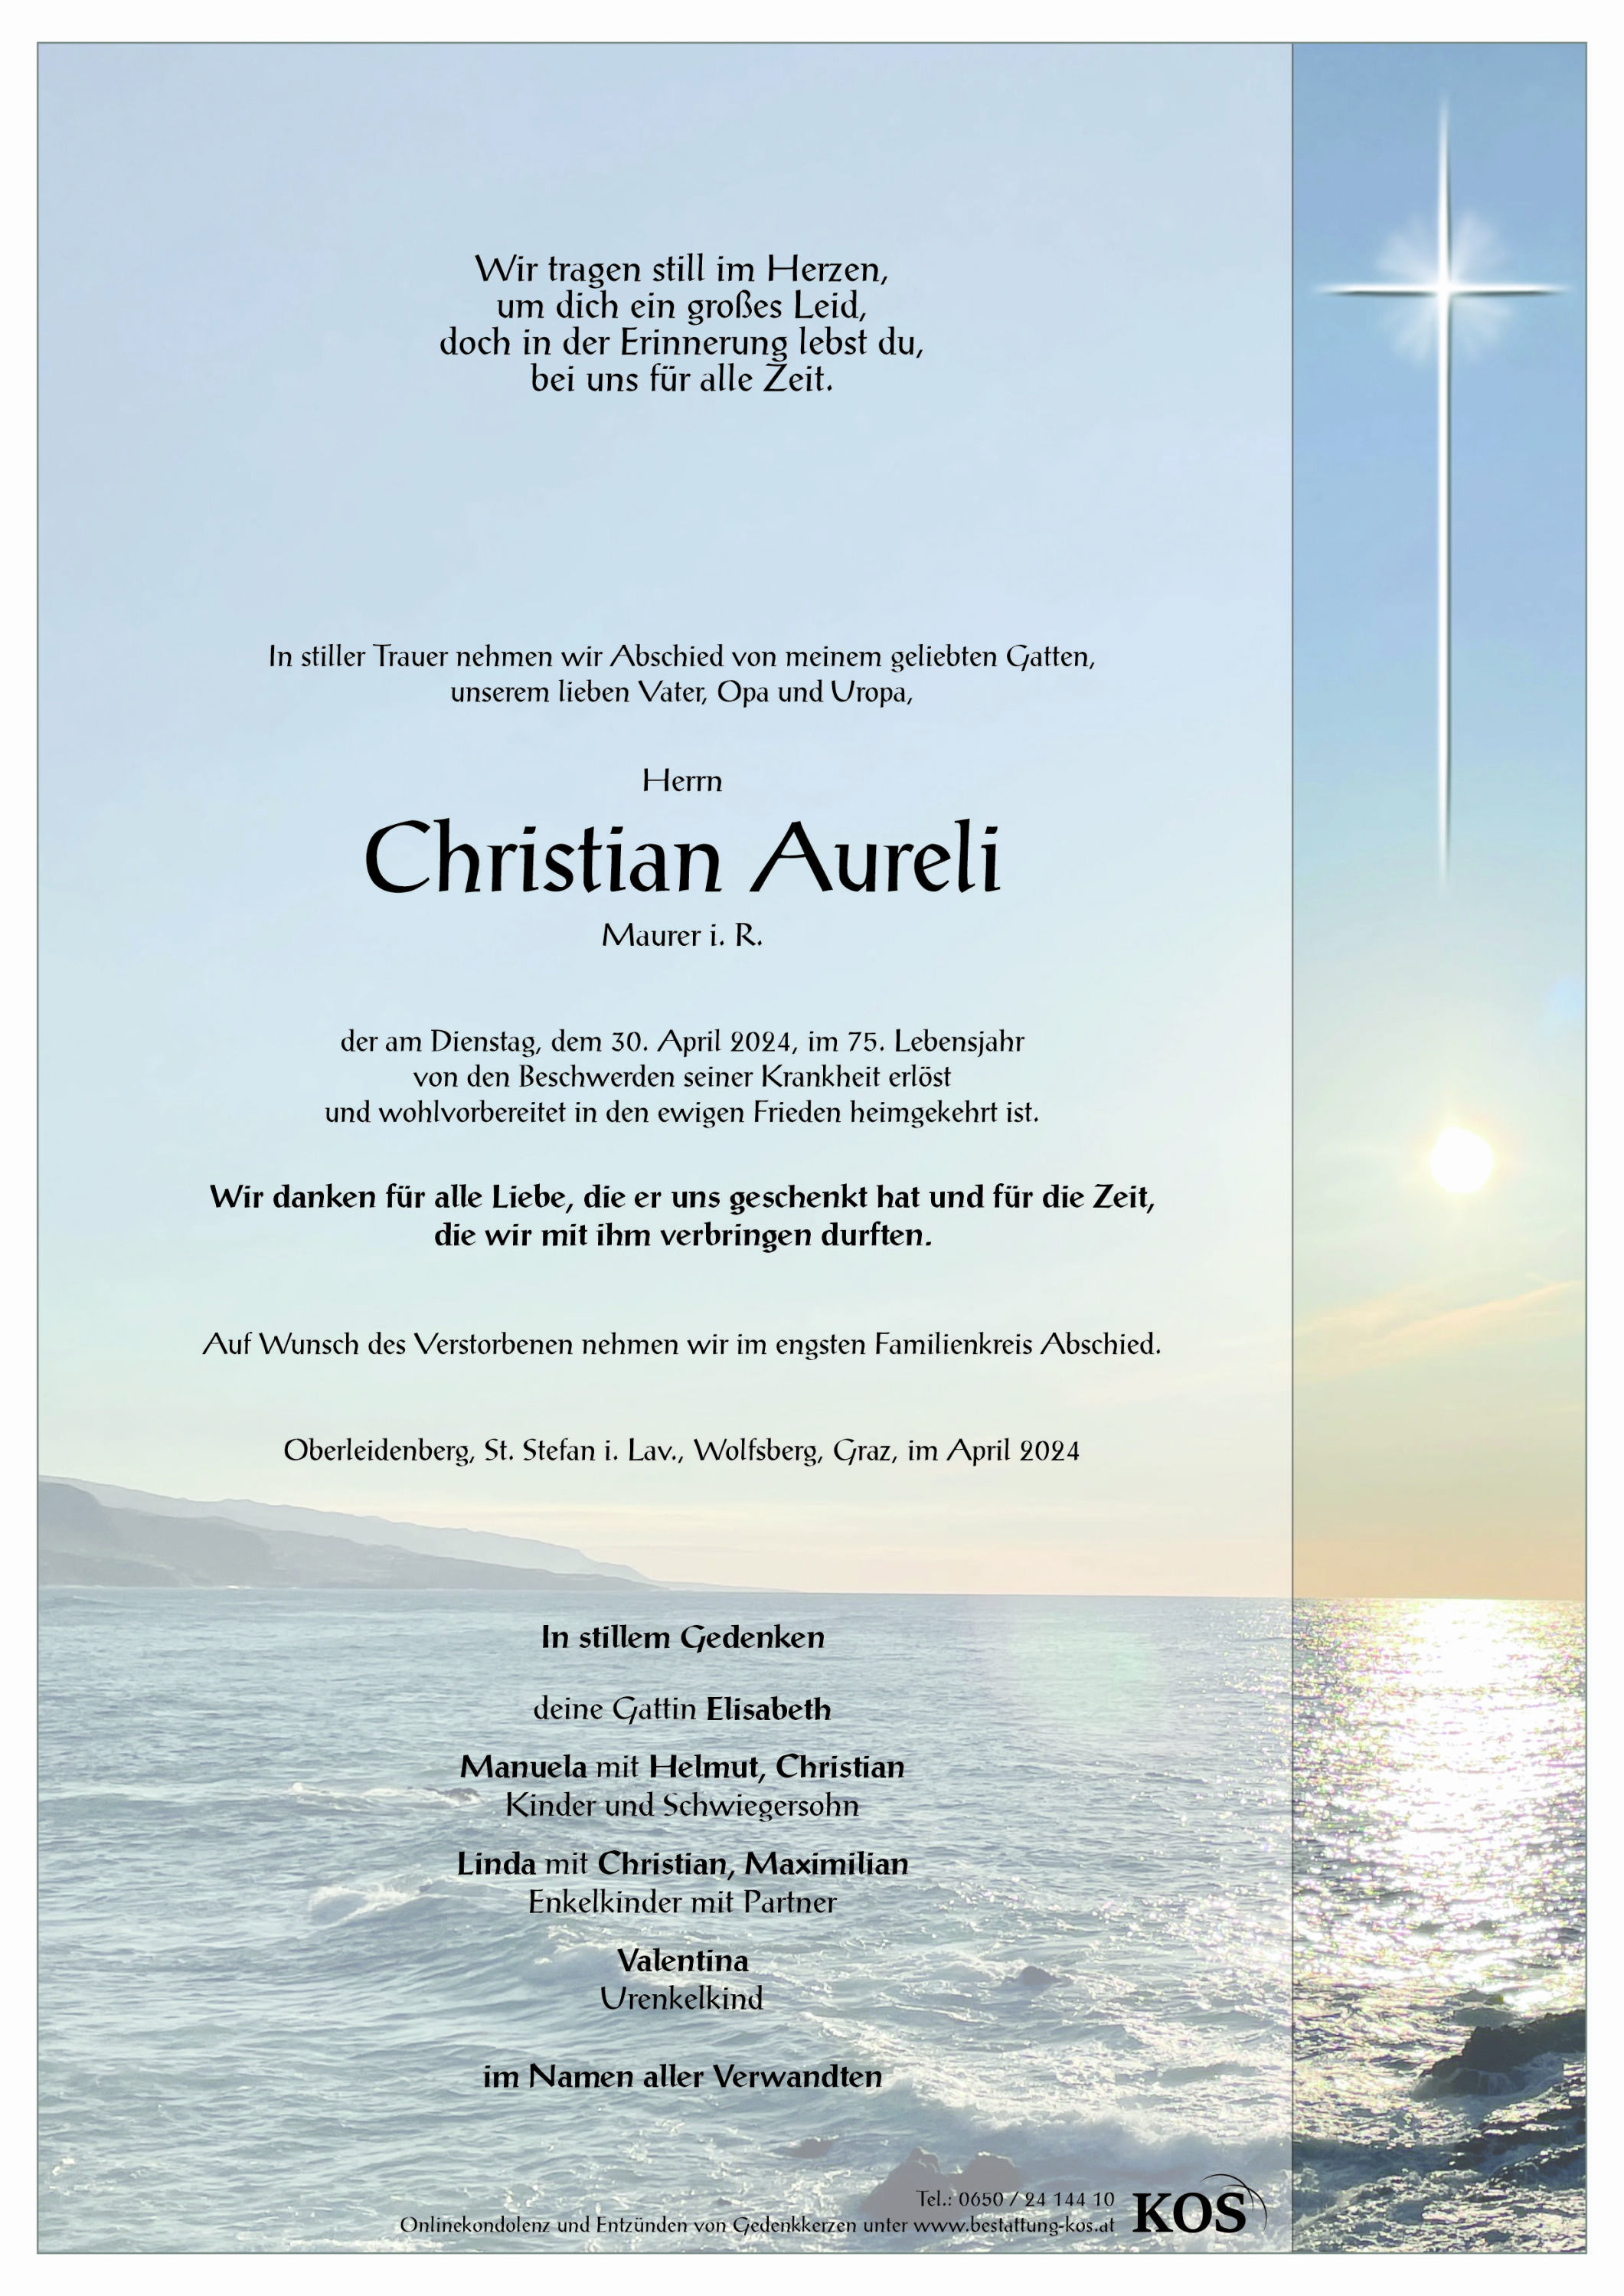 Christian Aureli